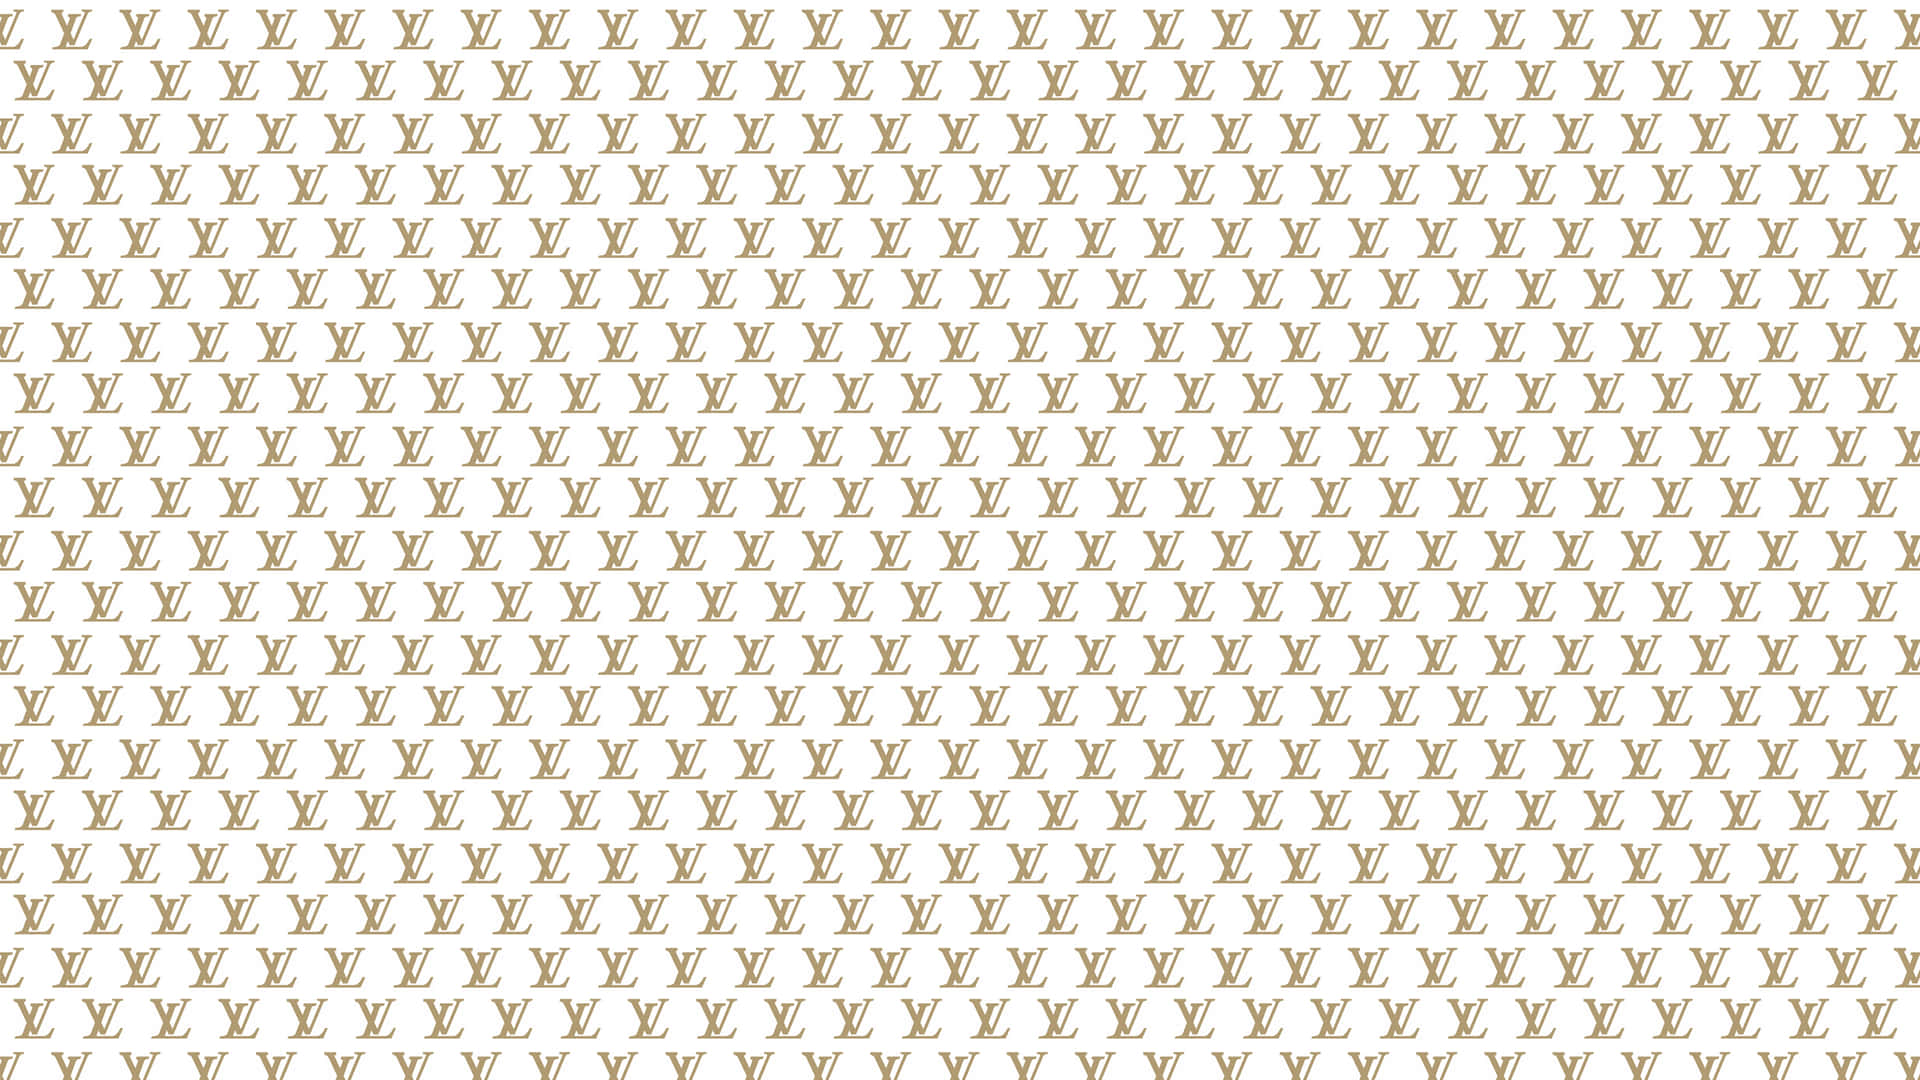 Download Louis Vuitton Abstract Desktop Background Wallpaper